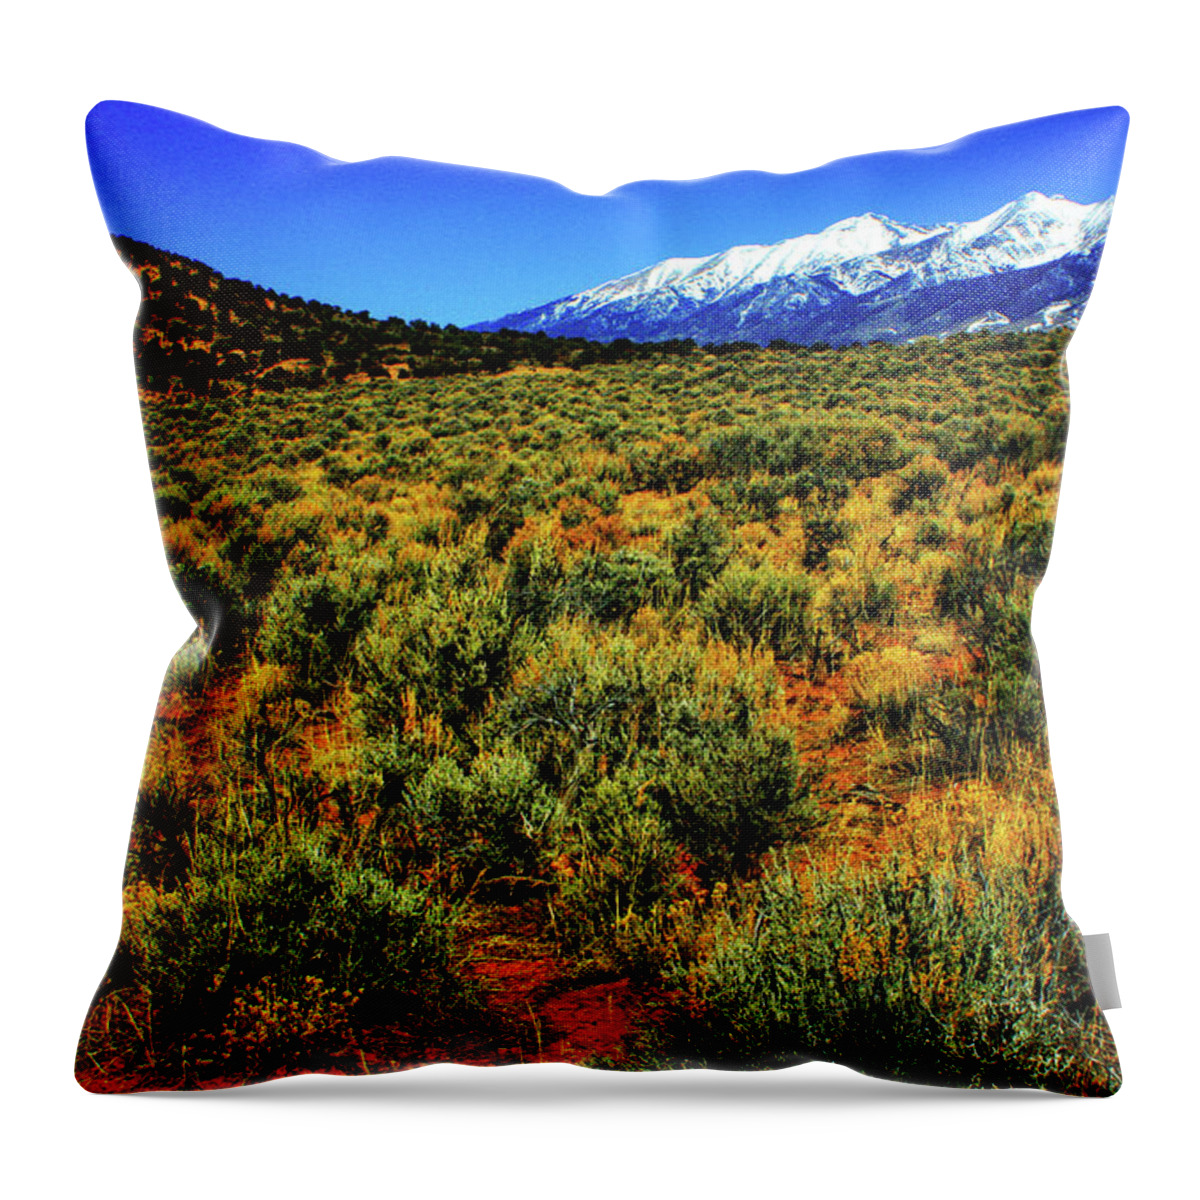 Colorado Throw Pillow featuring the photograph Sierra Blanca by Roger Passman